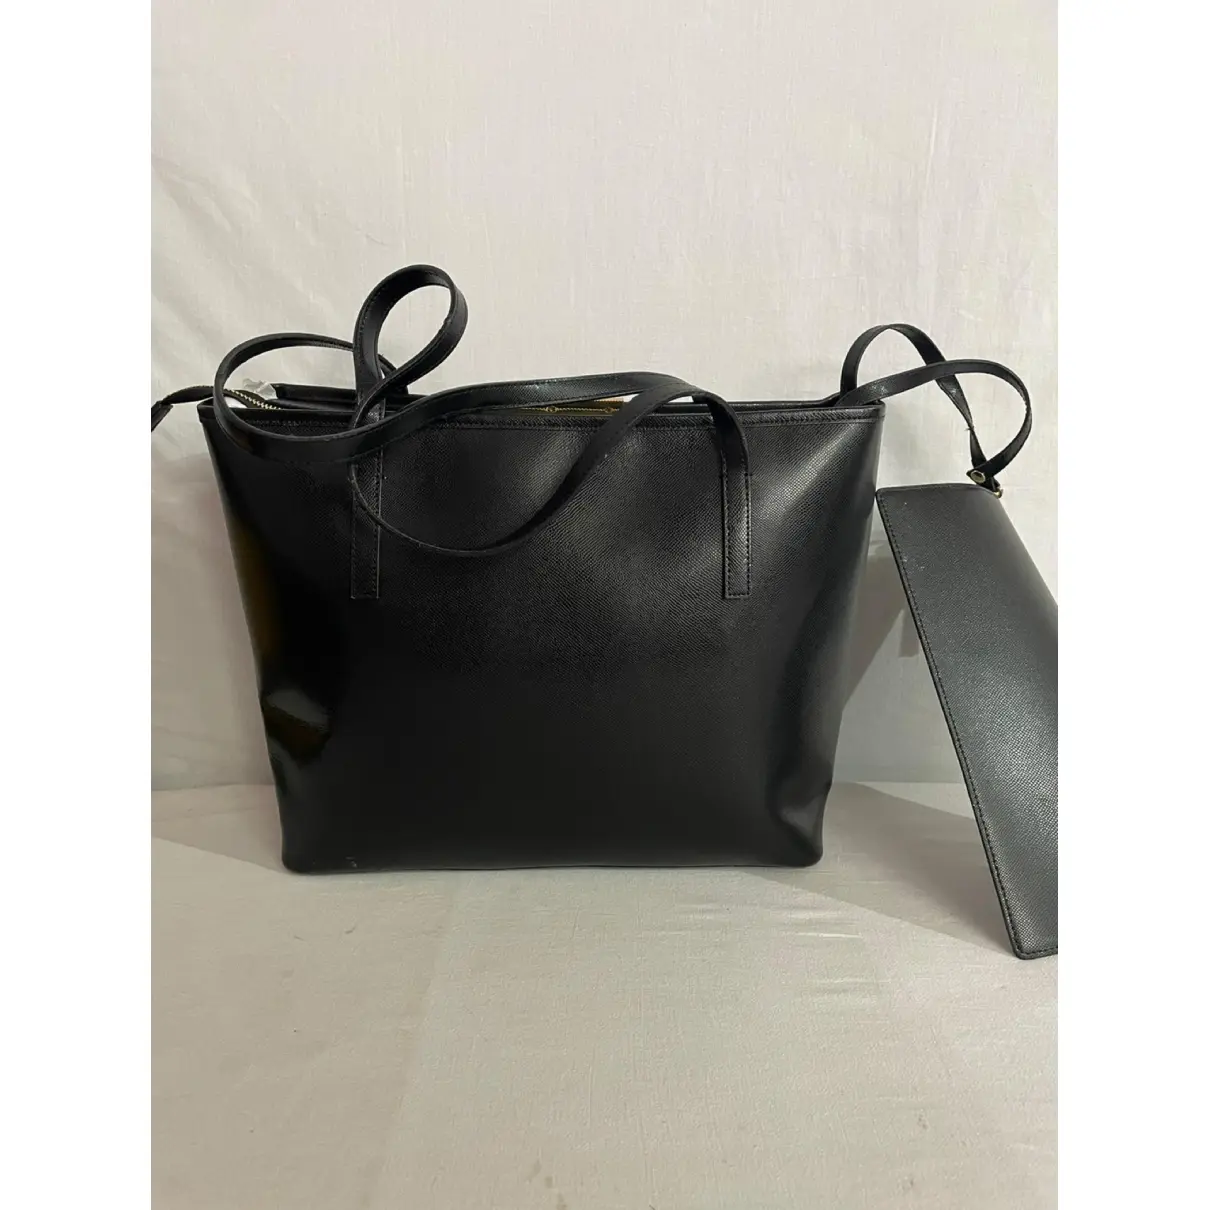 Buy Ted Baker Leather handbag online